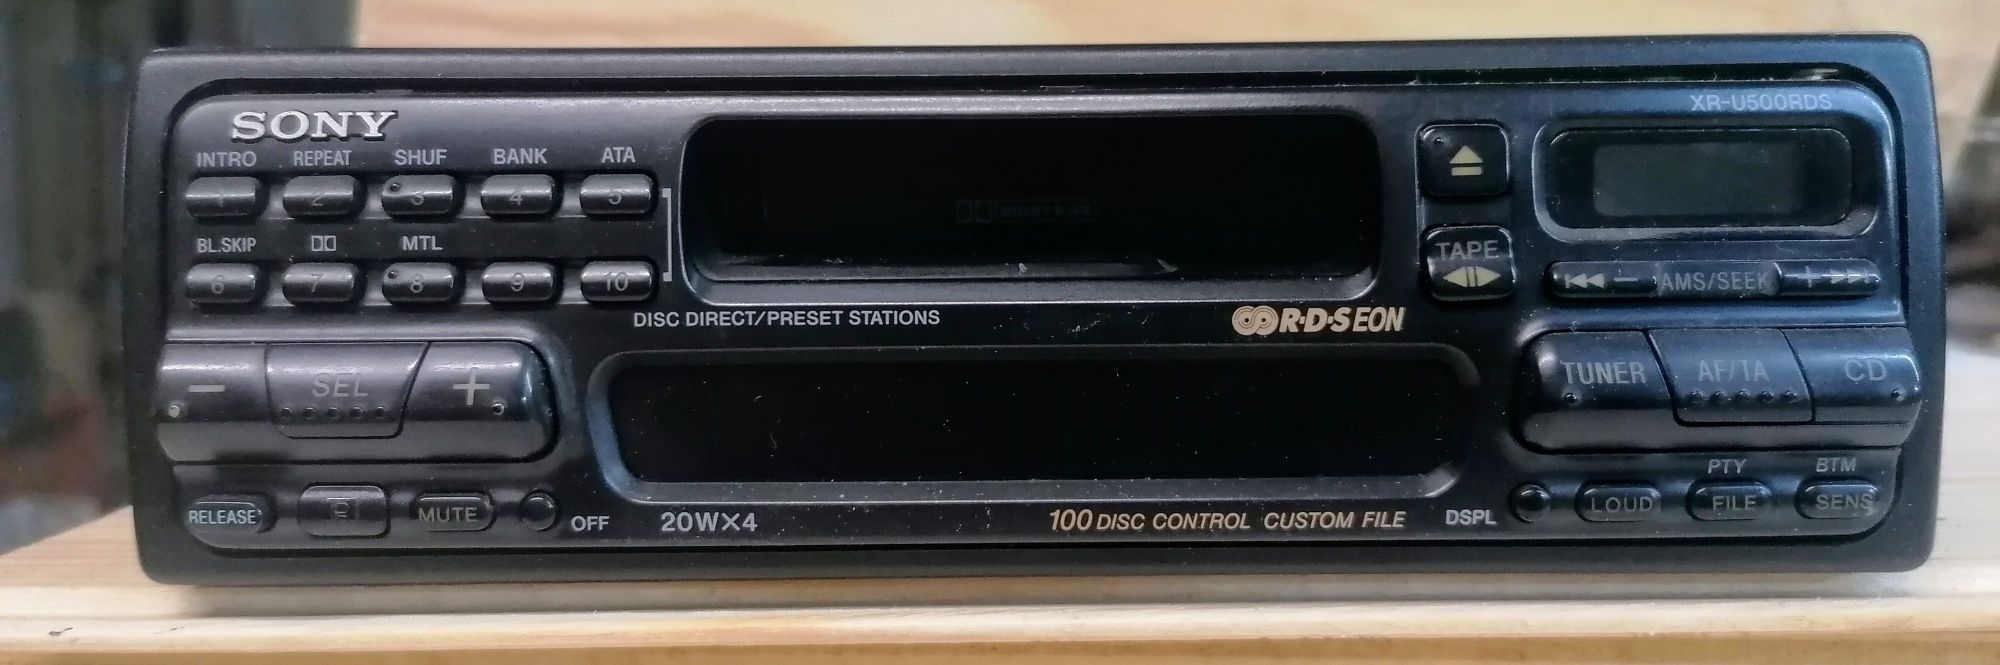 Radio Sony usado